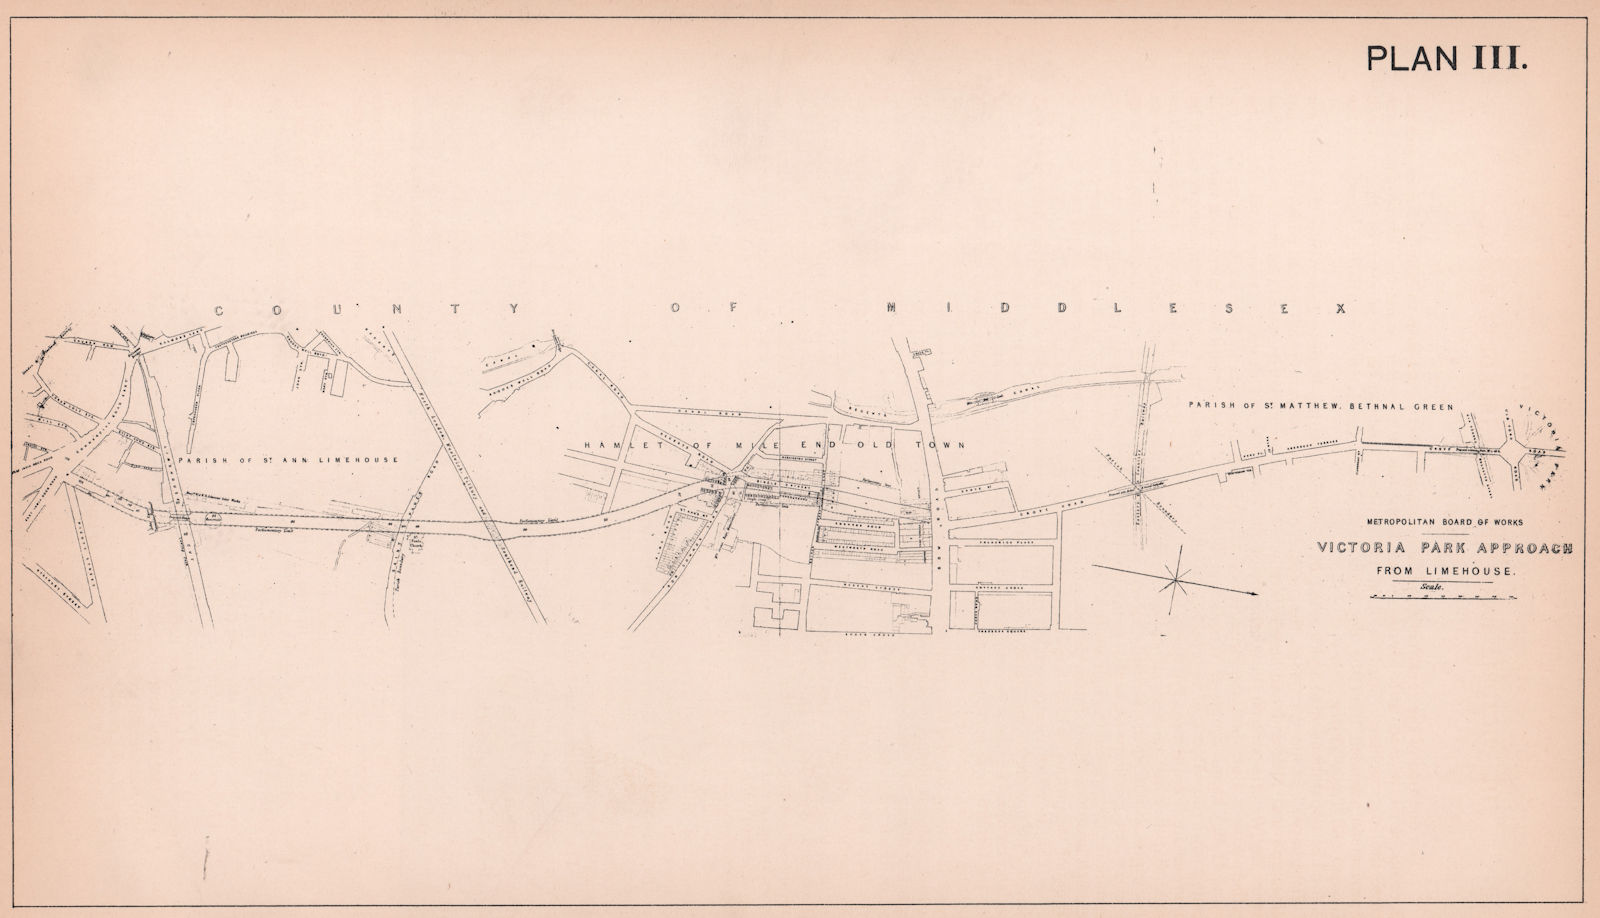 1862 Victoria Park approach from Limehouse. Burdett Road development 1898 map